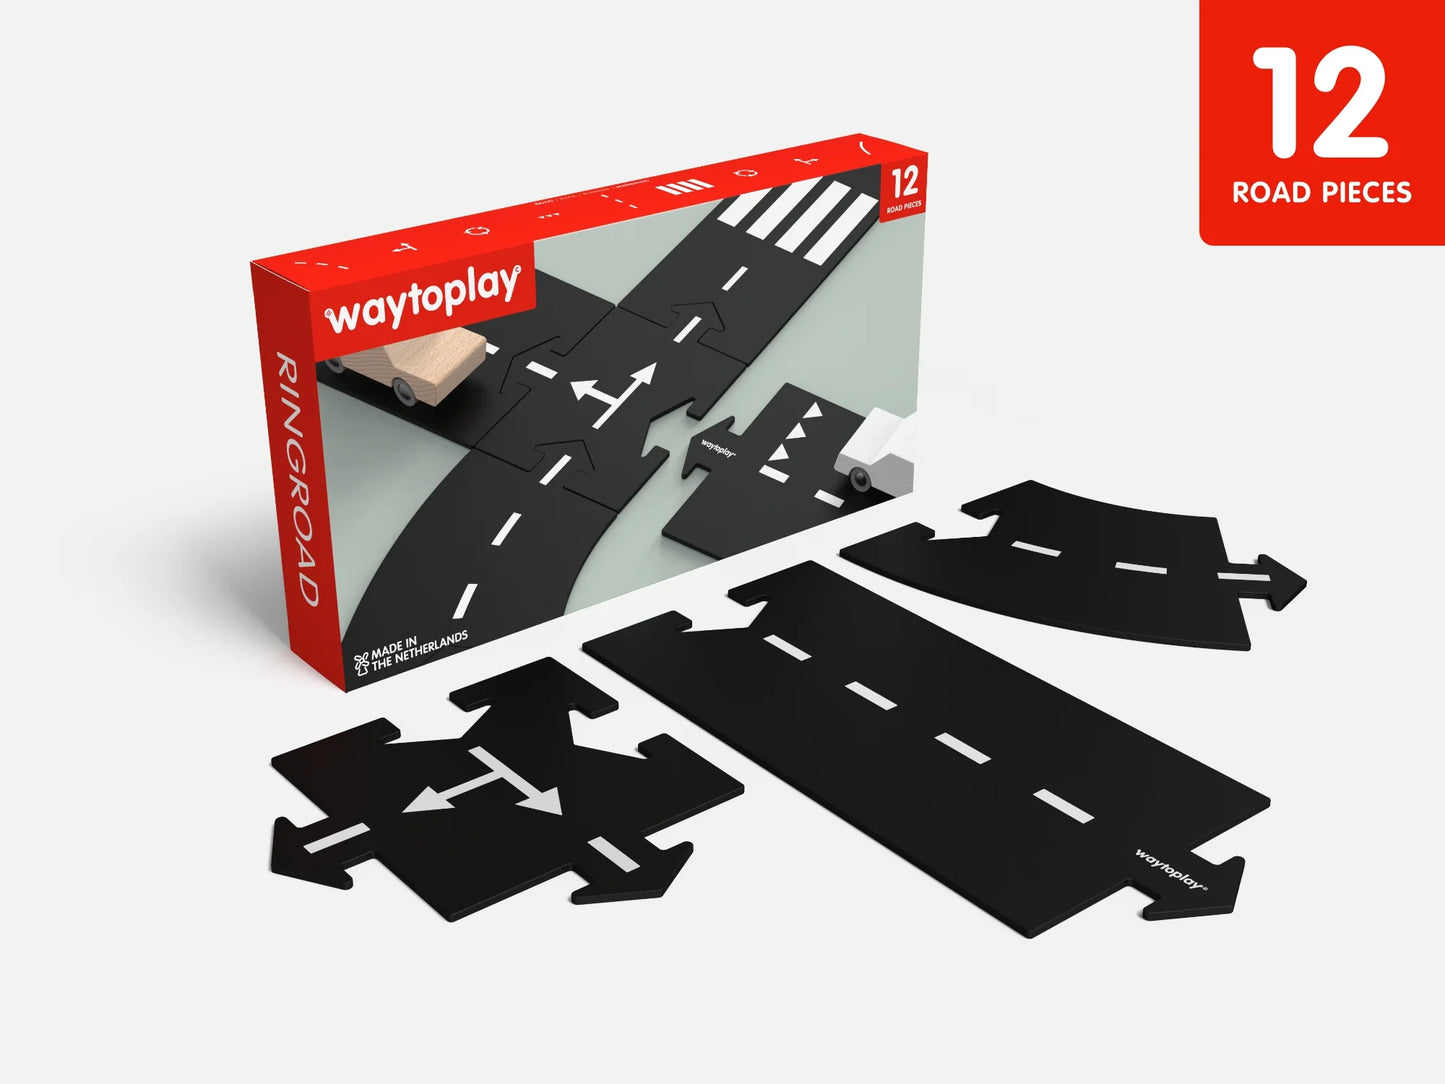 Waytoplay Flexible Roads - Ringroad Set (12 pieces)